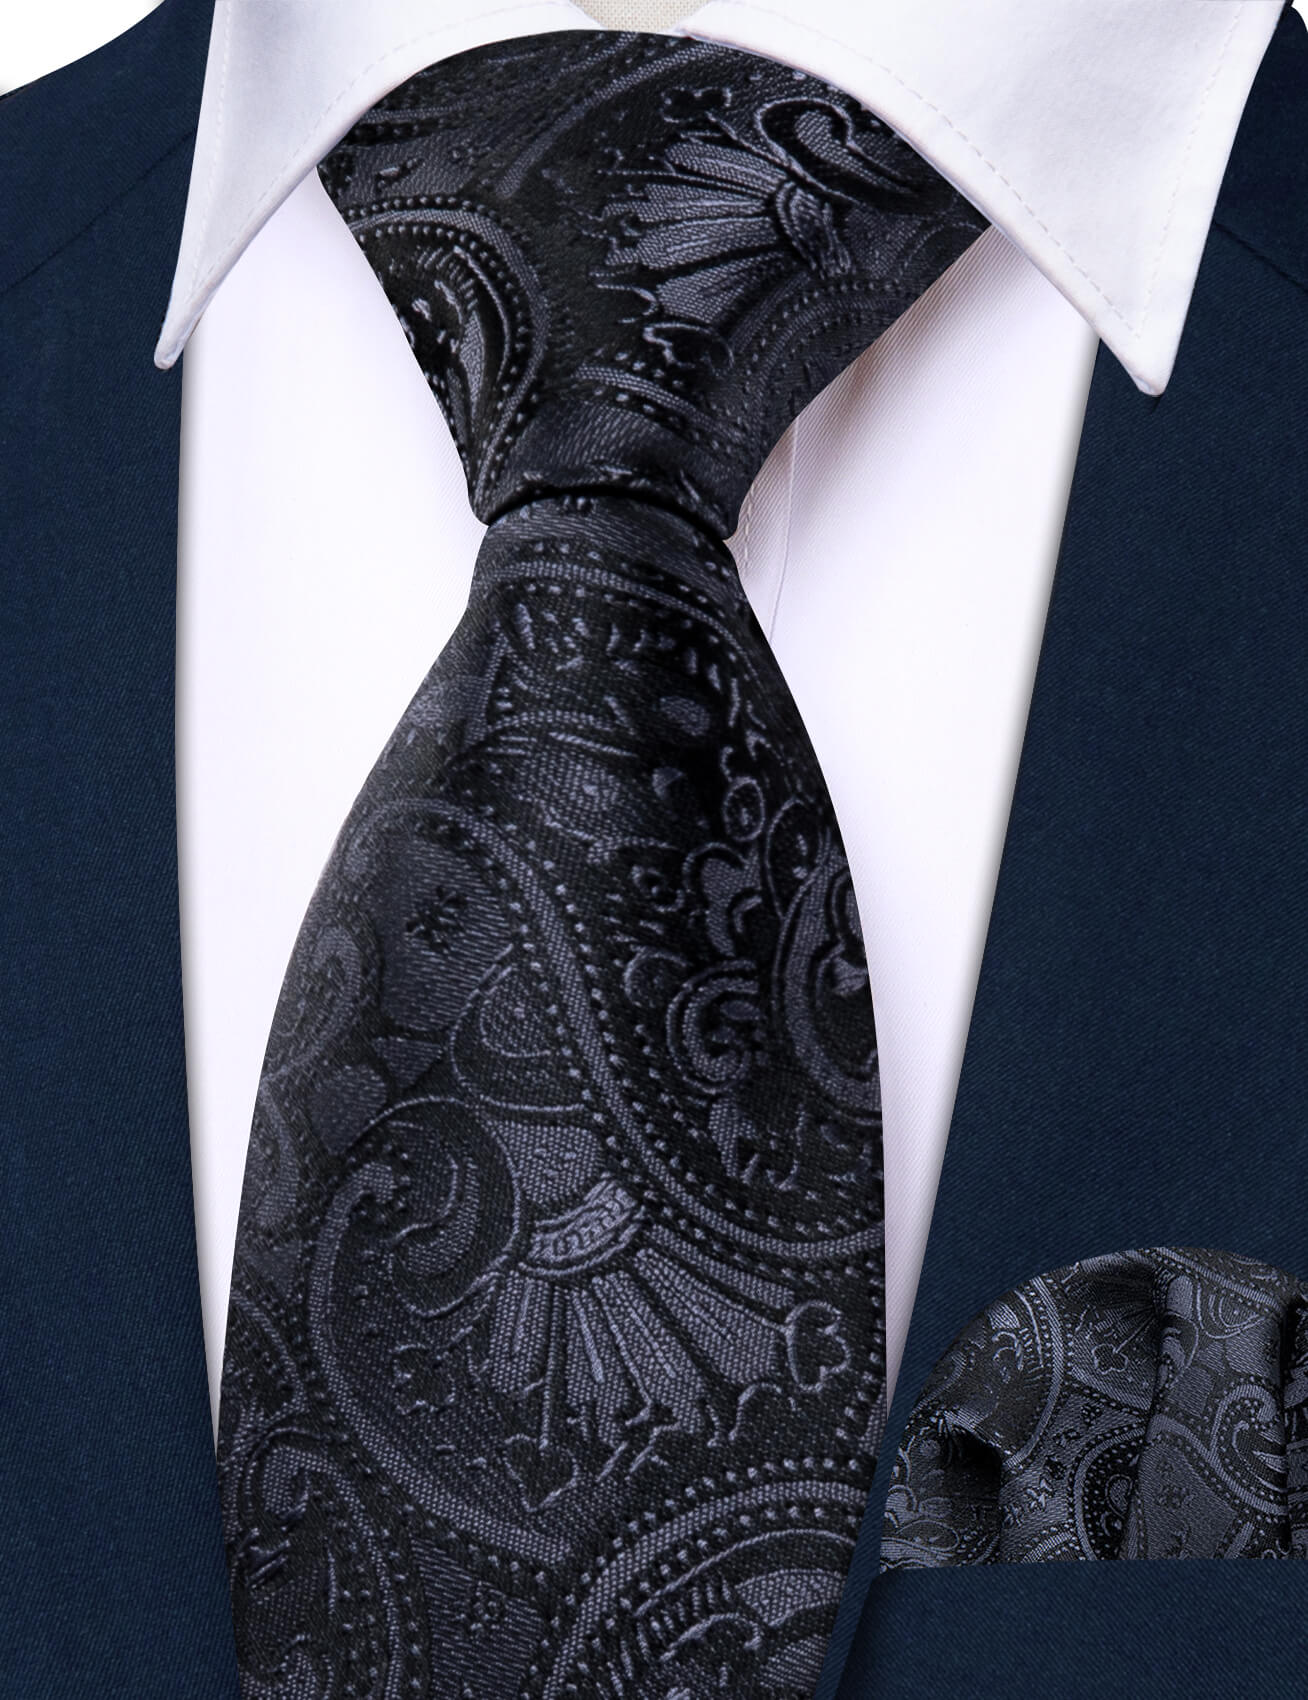 Barry.wang Floral Tie Black Grey Jacquard Children's Tie Hanky Set